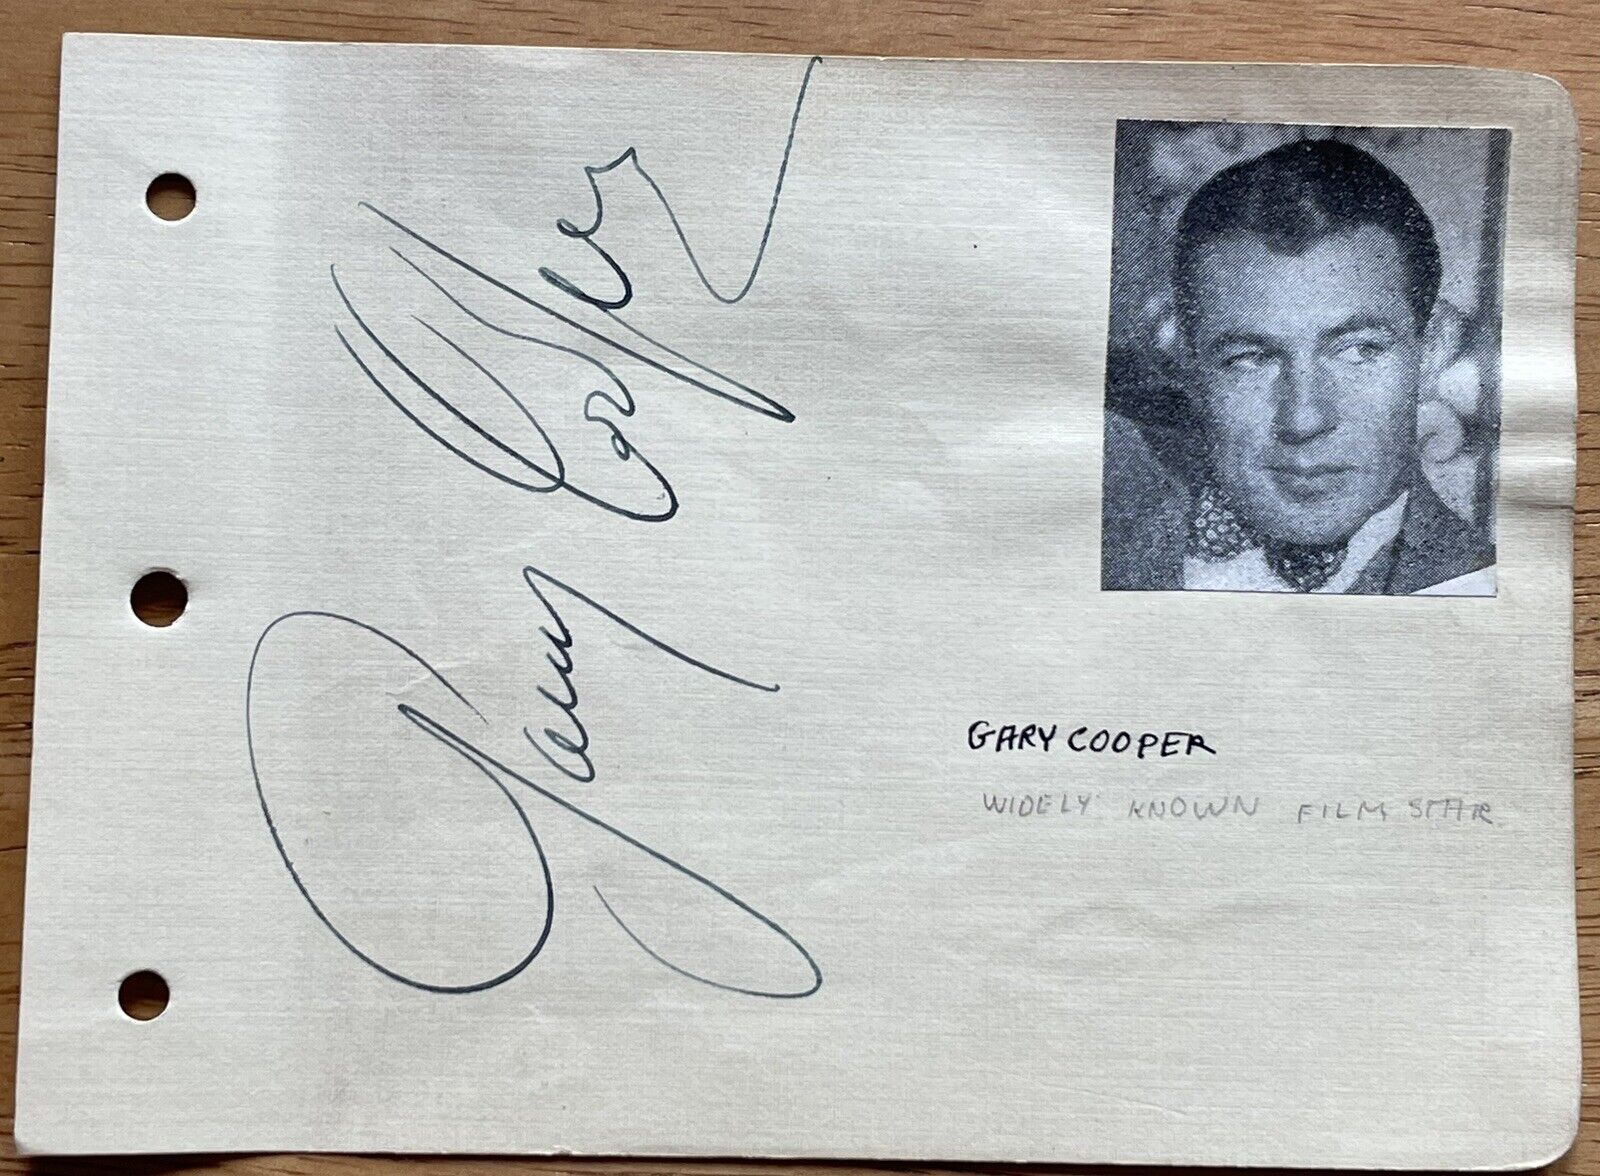 Actor Gary Cooper Autograph Album Page